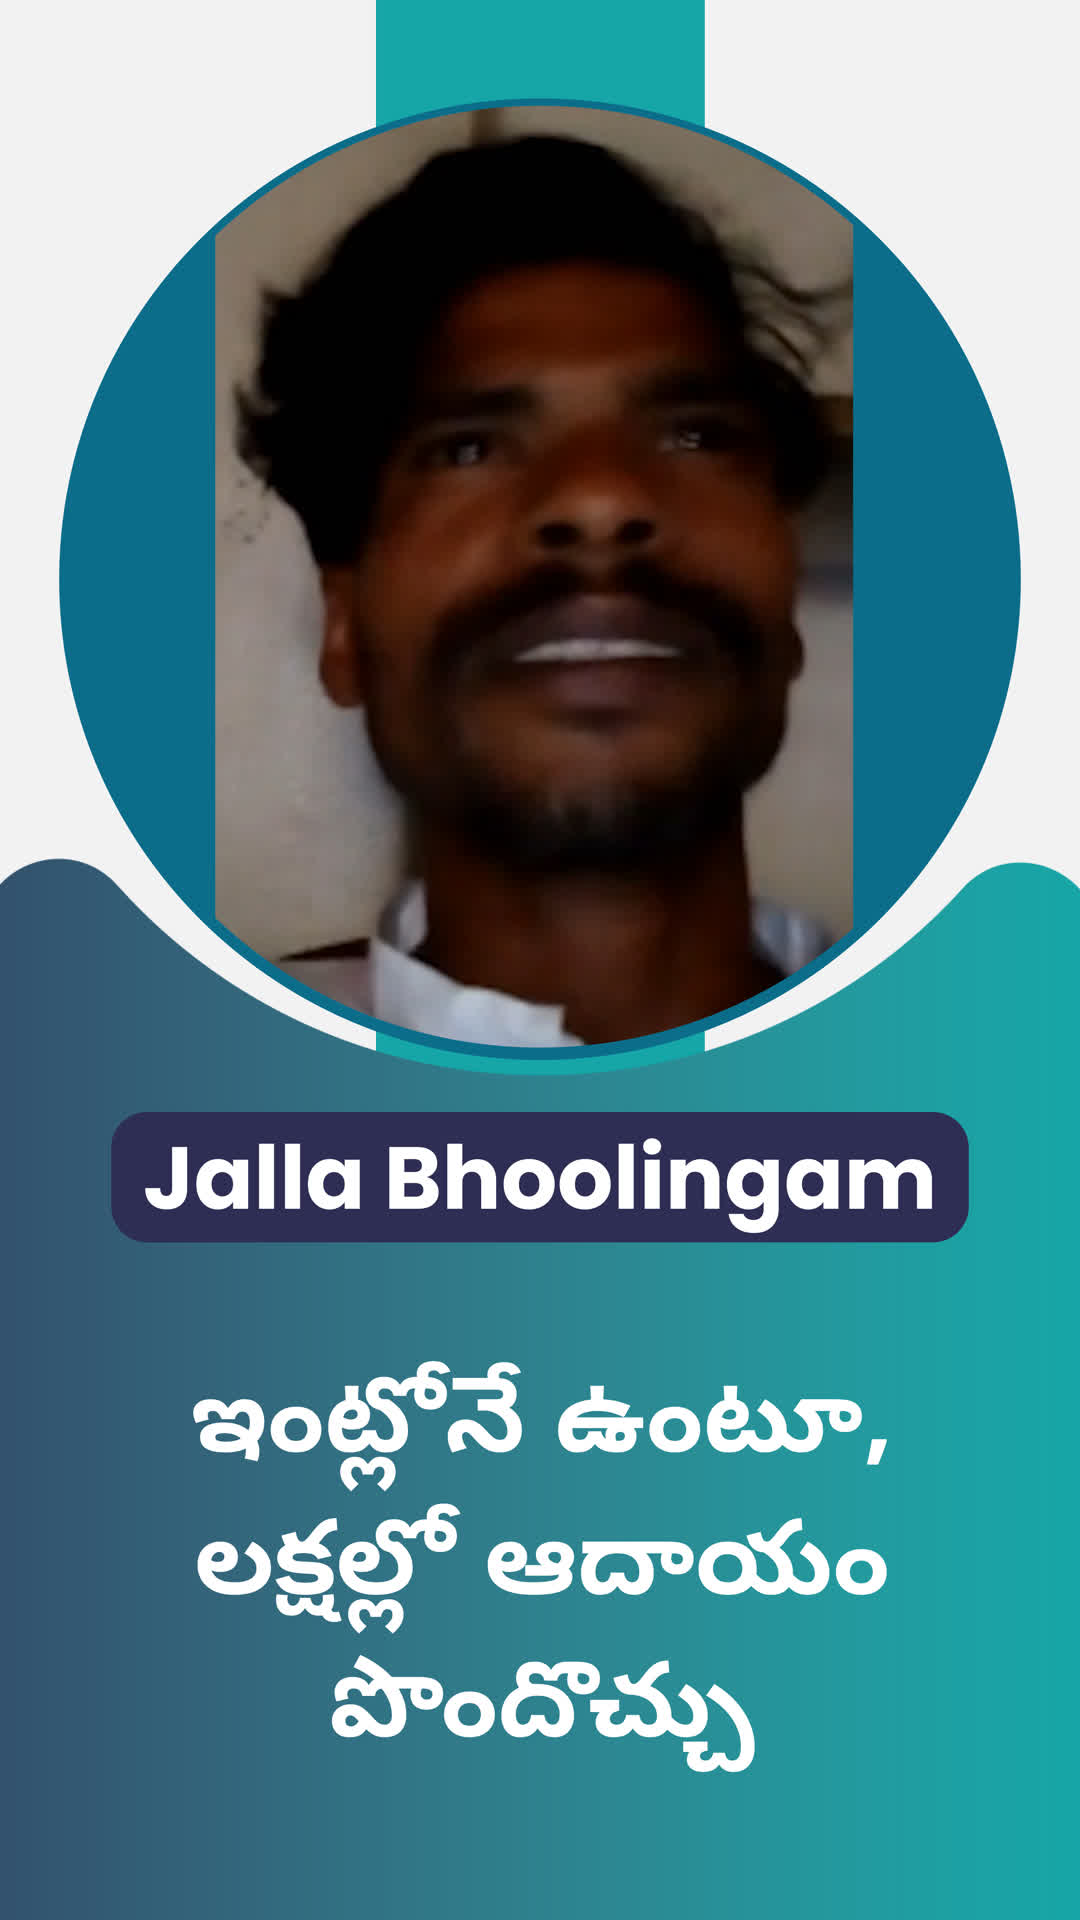 jalla bhoolingam's Honest Review of ffreedom app - Medak ,Telangana